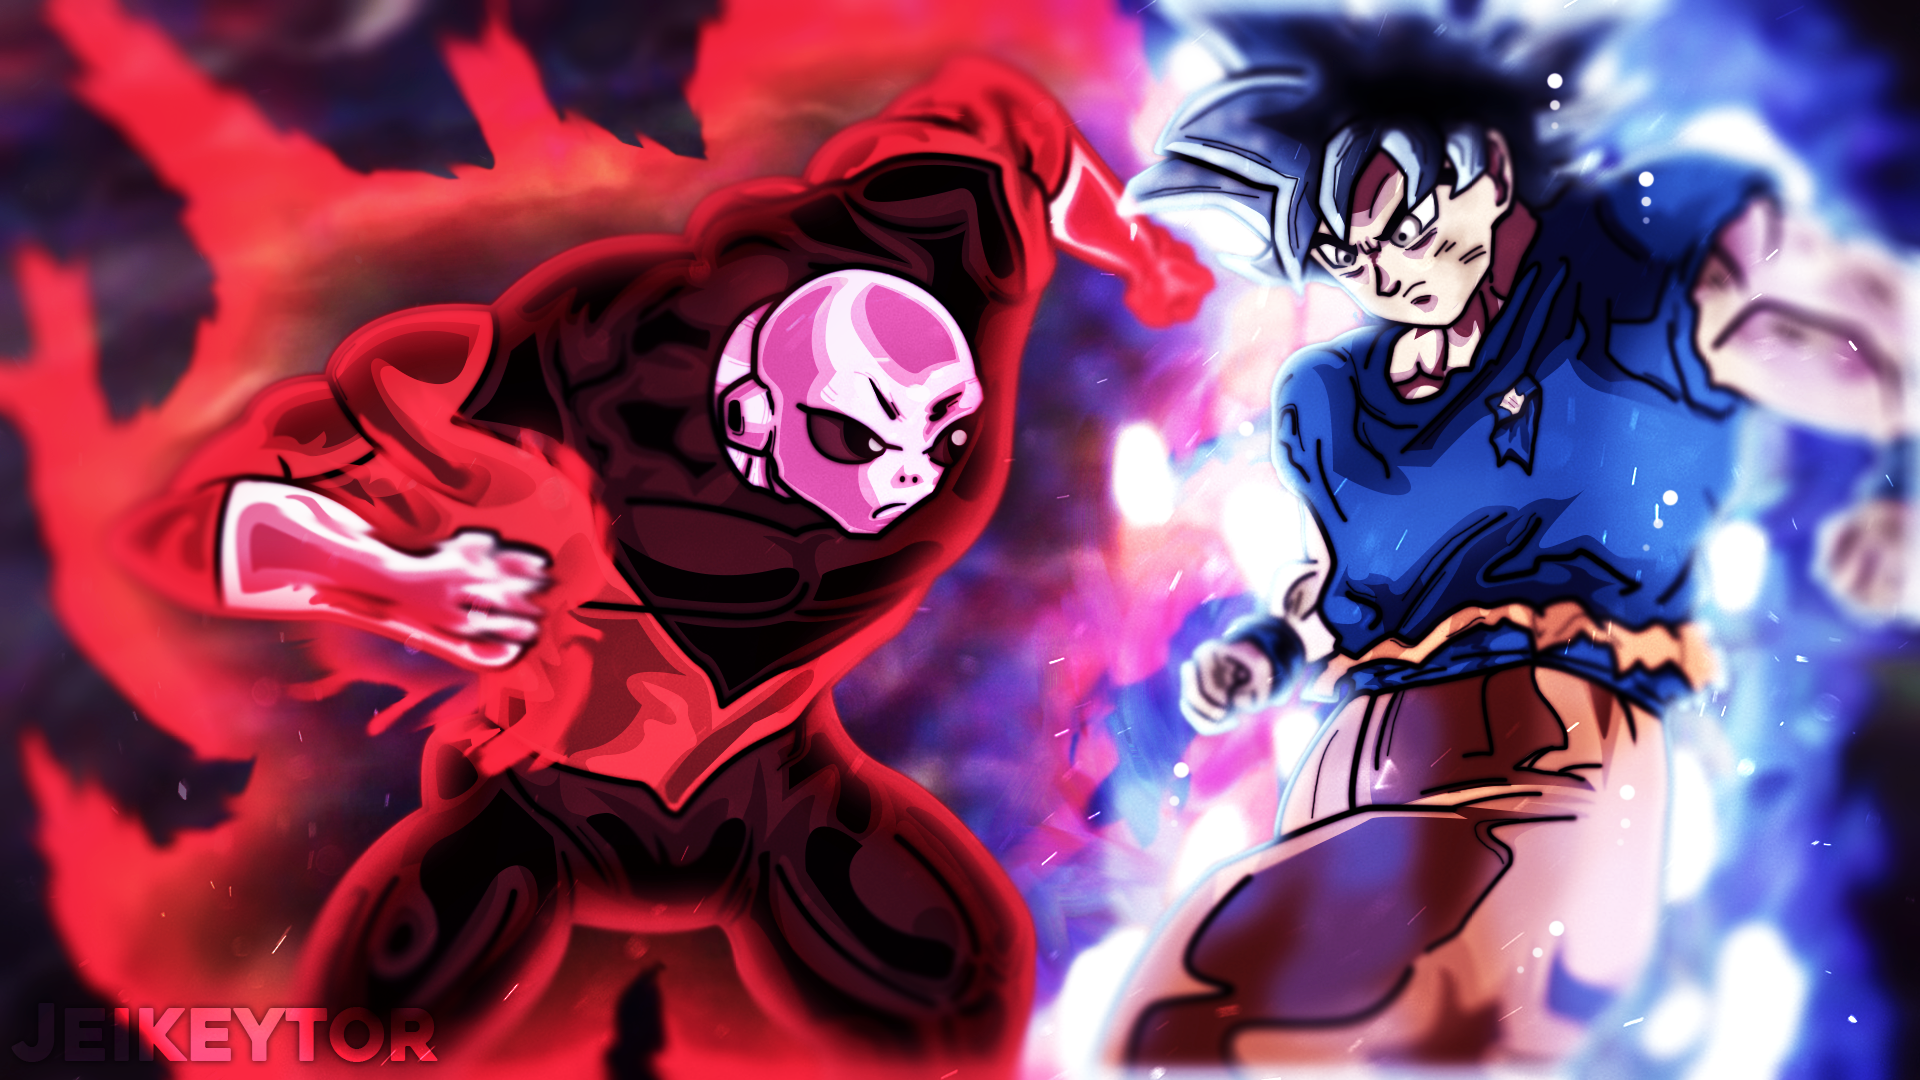 Goku and Jiren Wallpaper Free Goku and Jiren Background